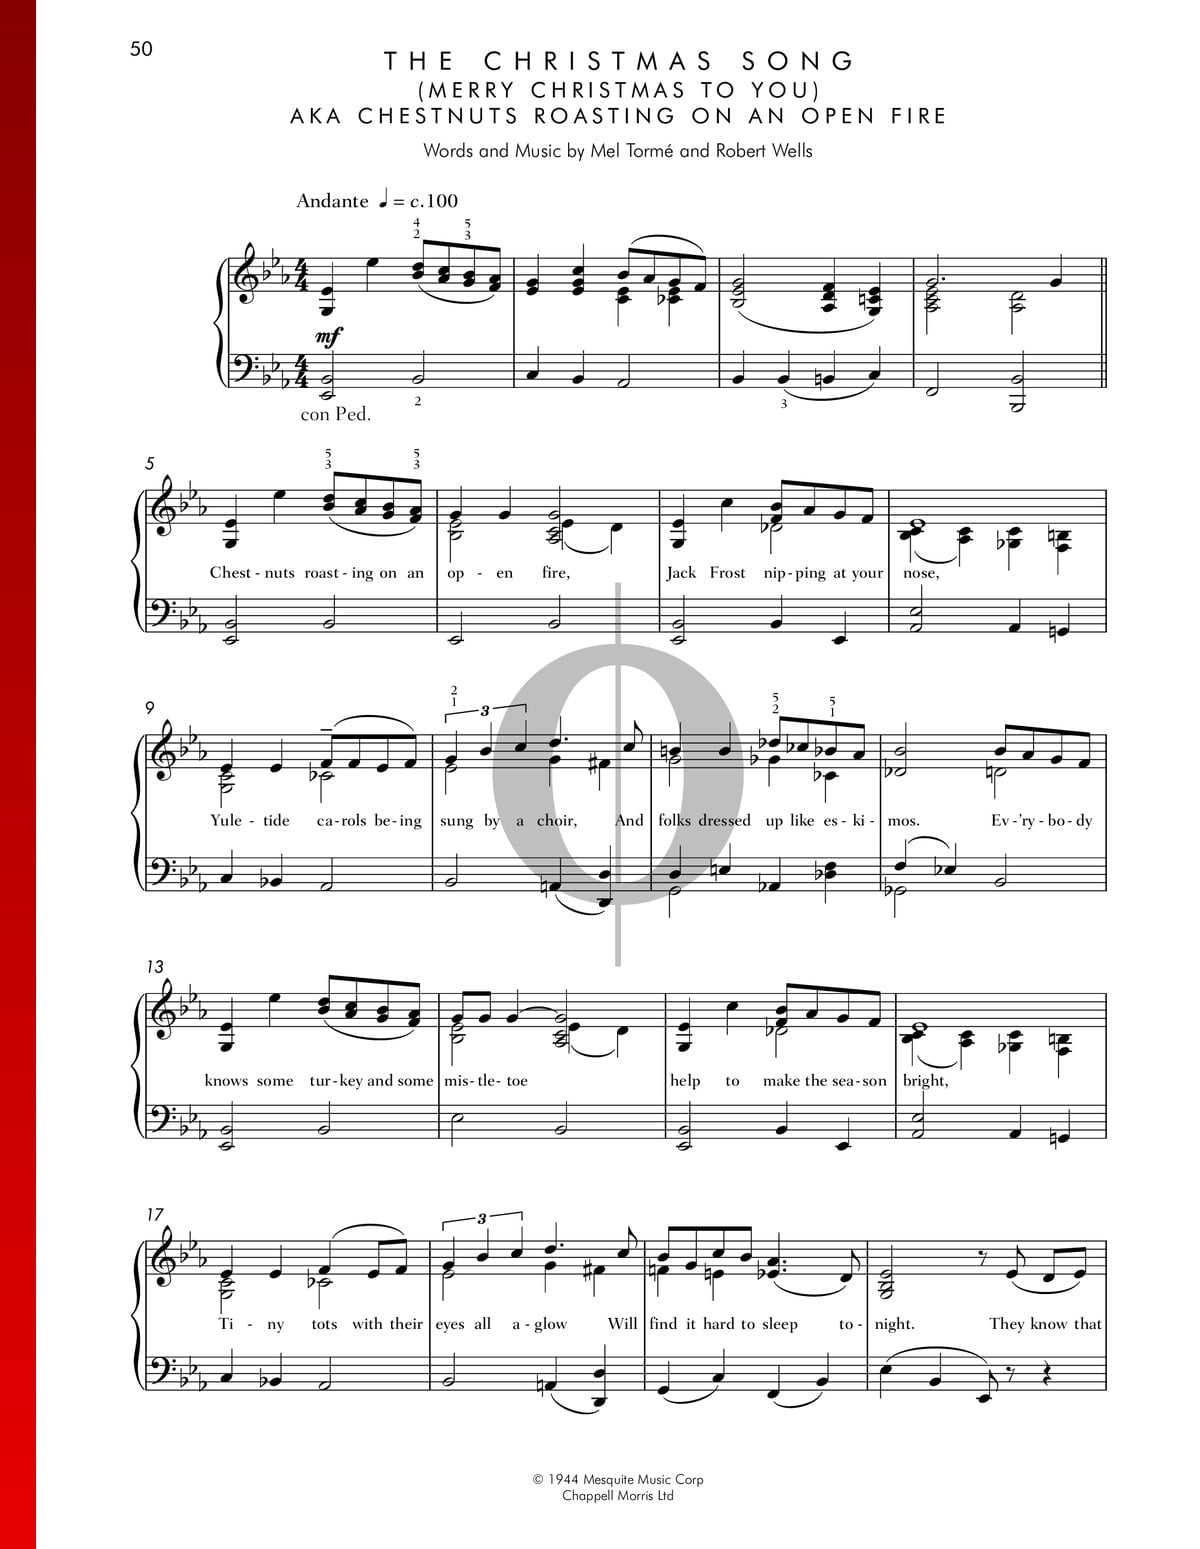 The Christmas Song Sheet Music (Piano, Voice) - PDF Download & Streaming - OKTAV